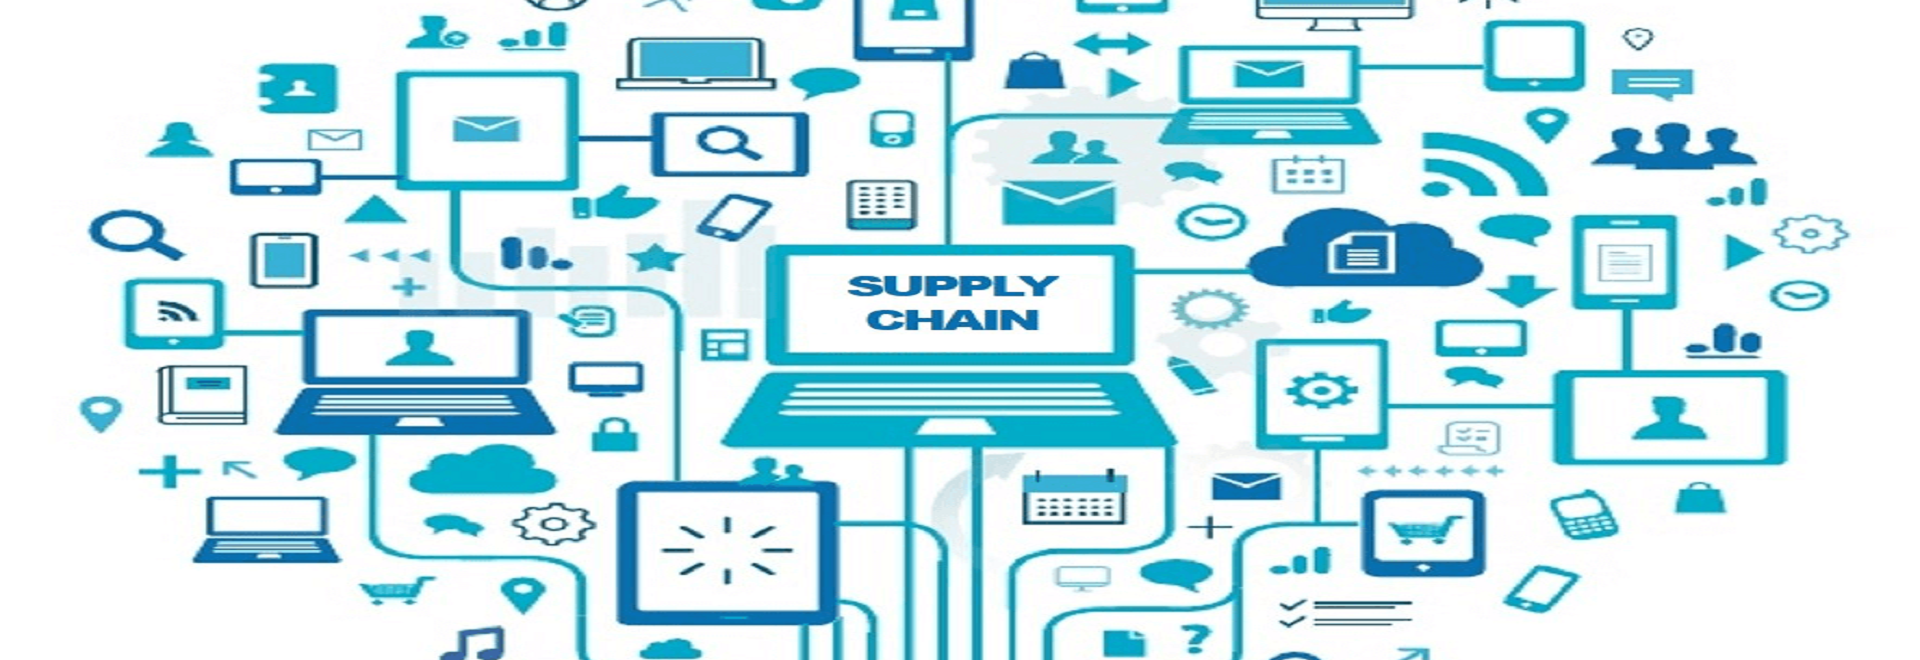 supply chain system 885x590 - صفحه اصلی